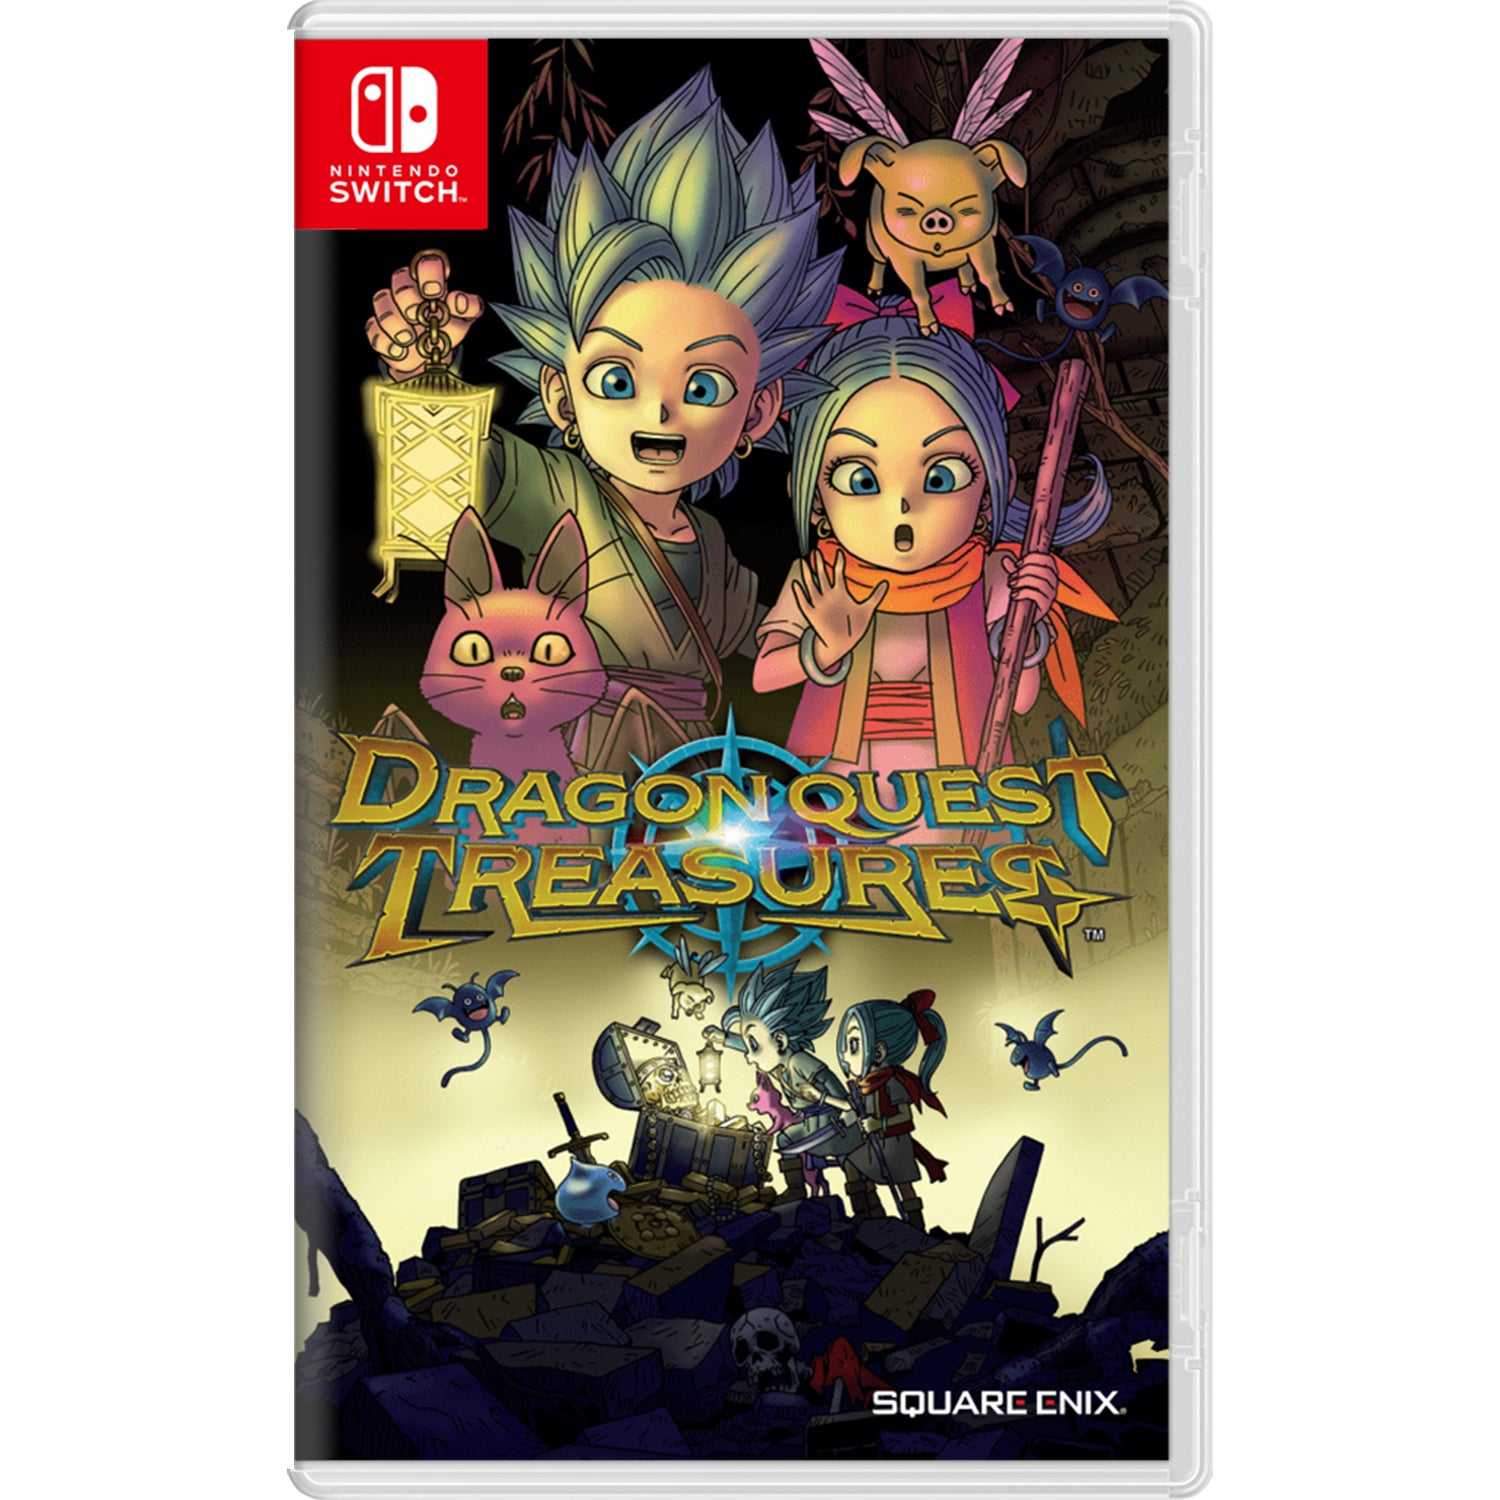 Double Dragon Collection - Nintendo Switch NSW – The Emporium